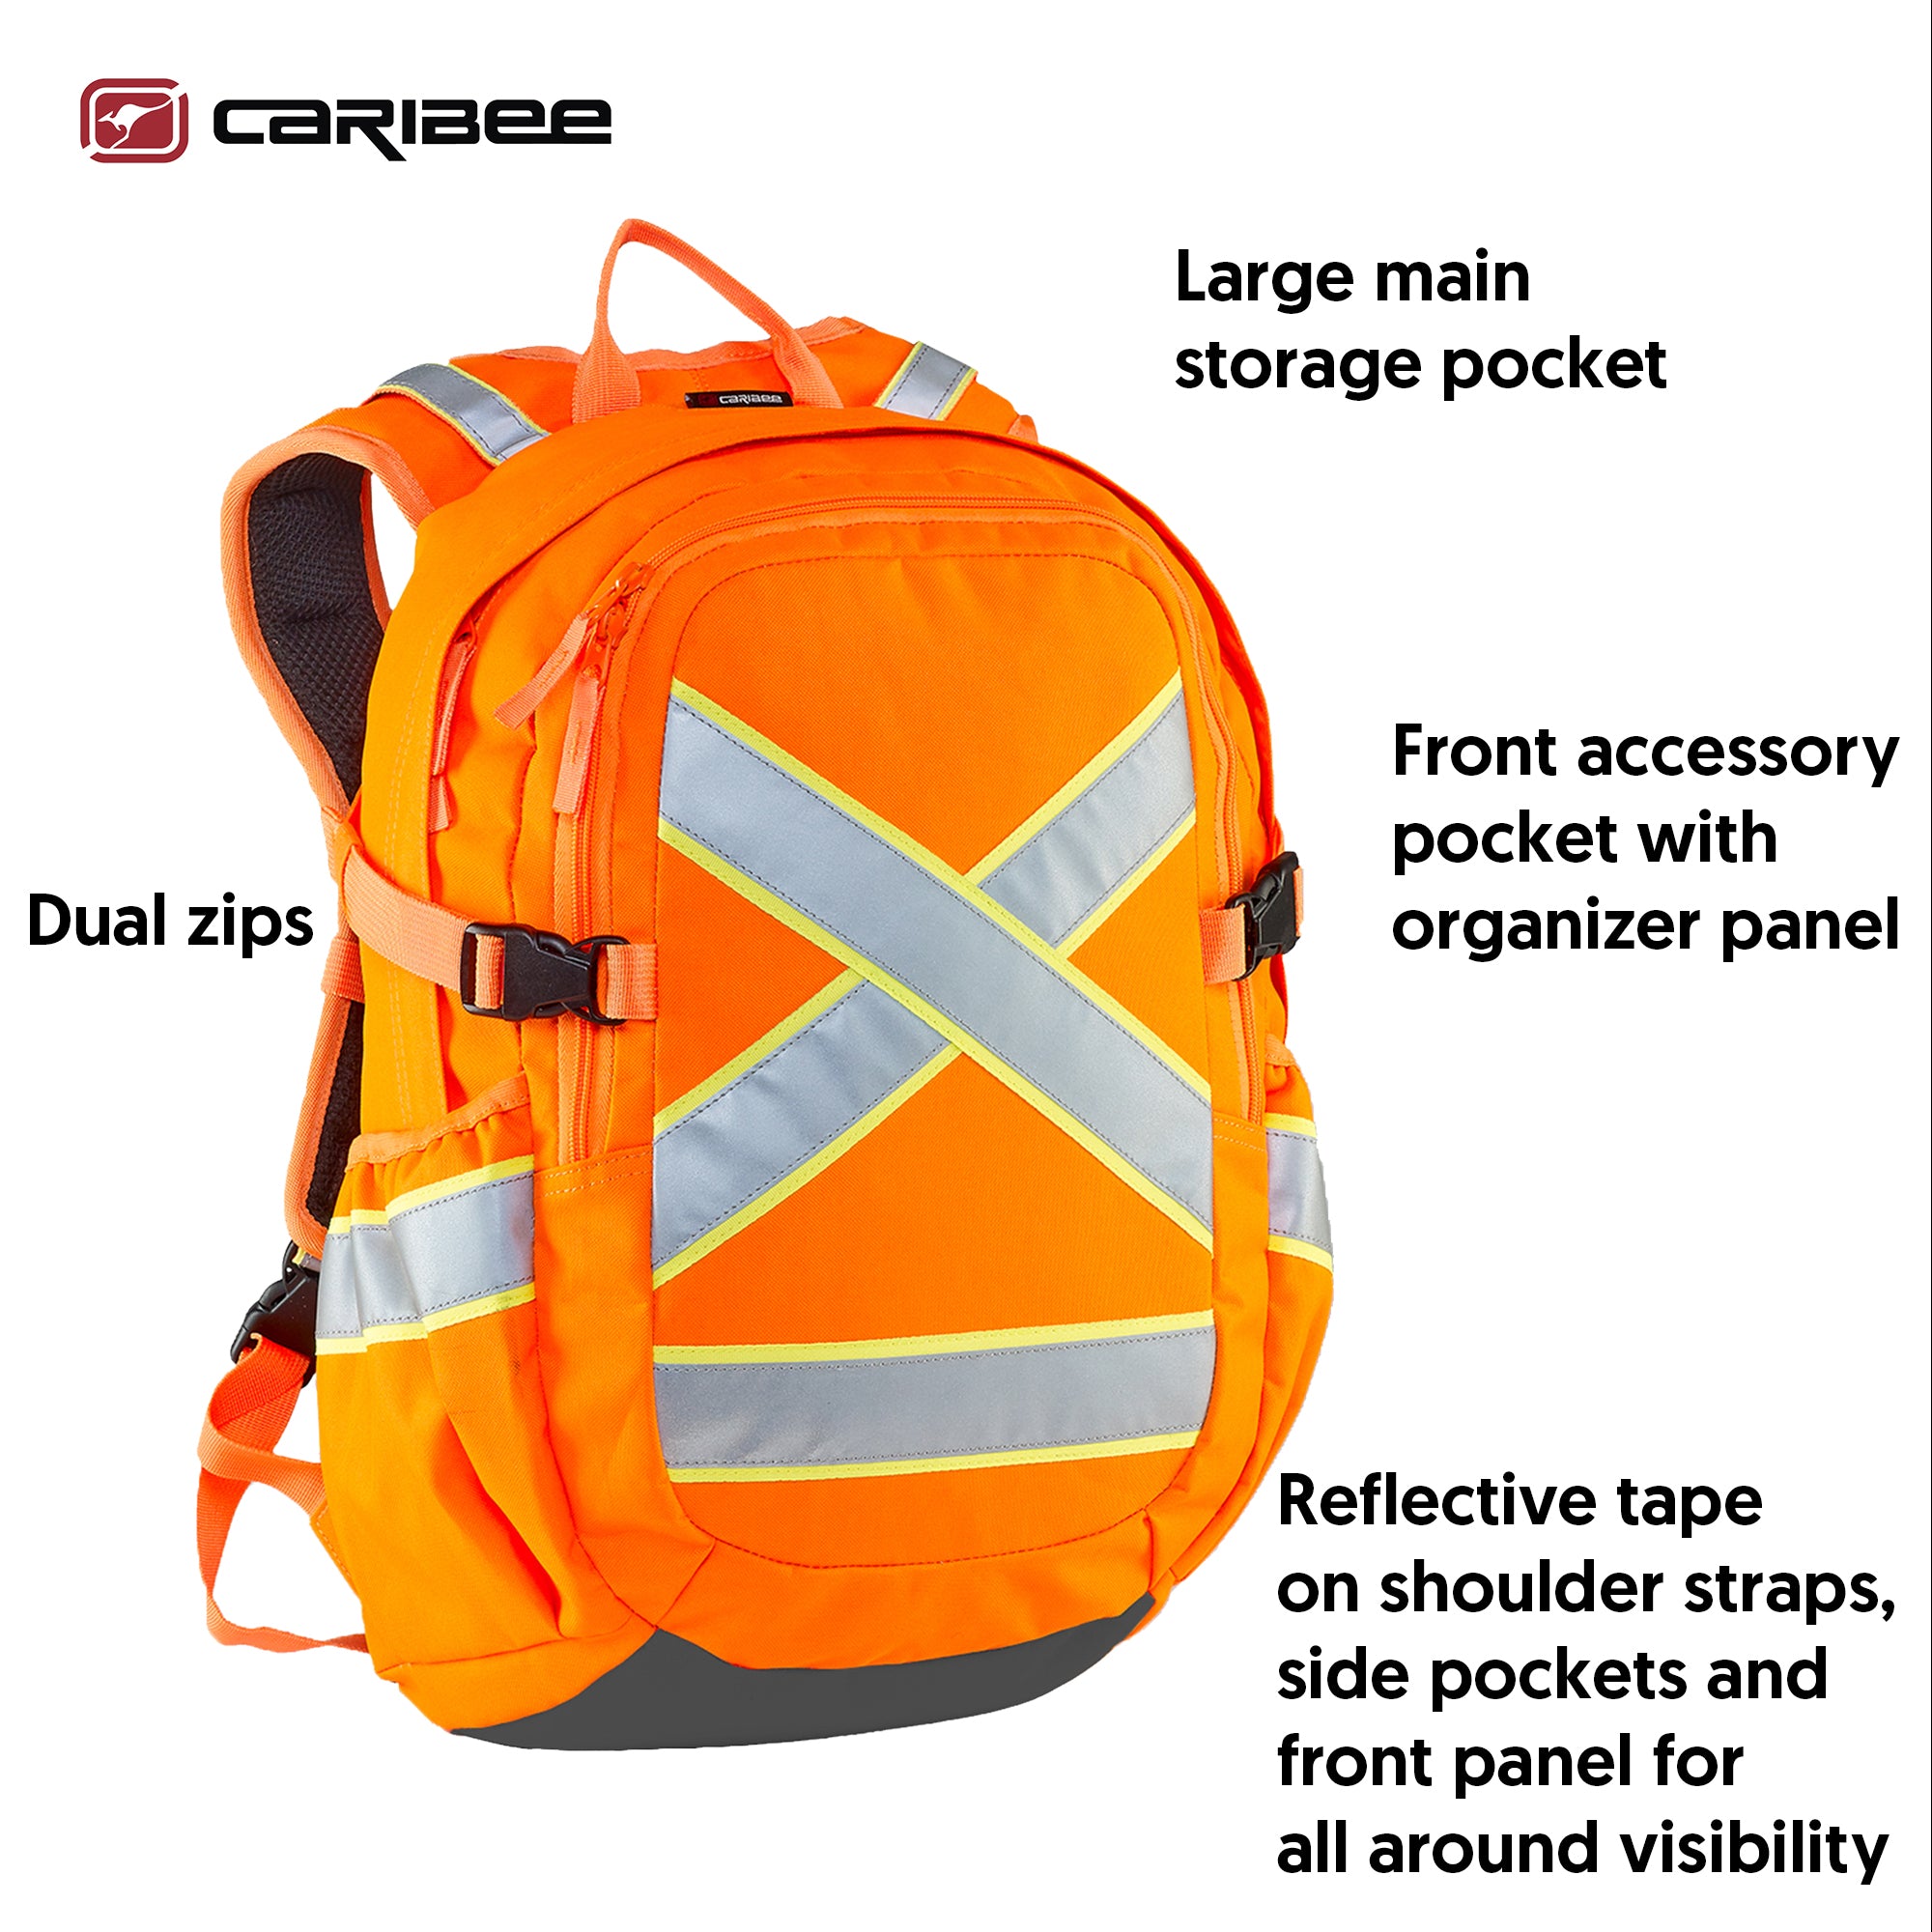 Caribee Op's 50L Military Style Backpack - Desert Camo | eBay